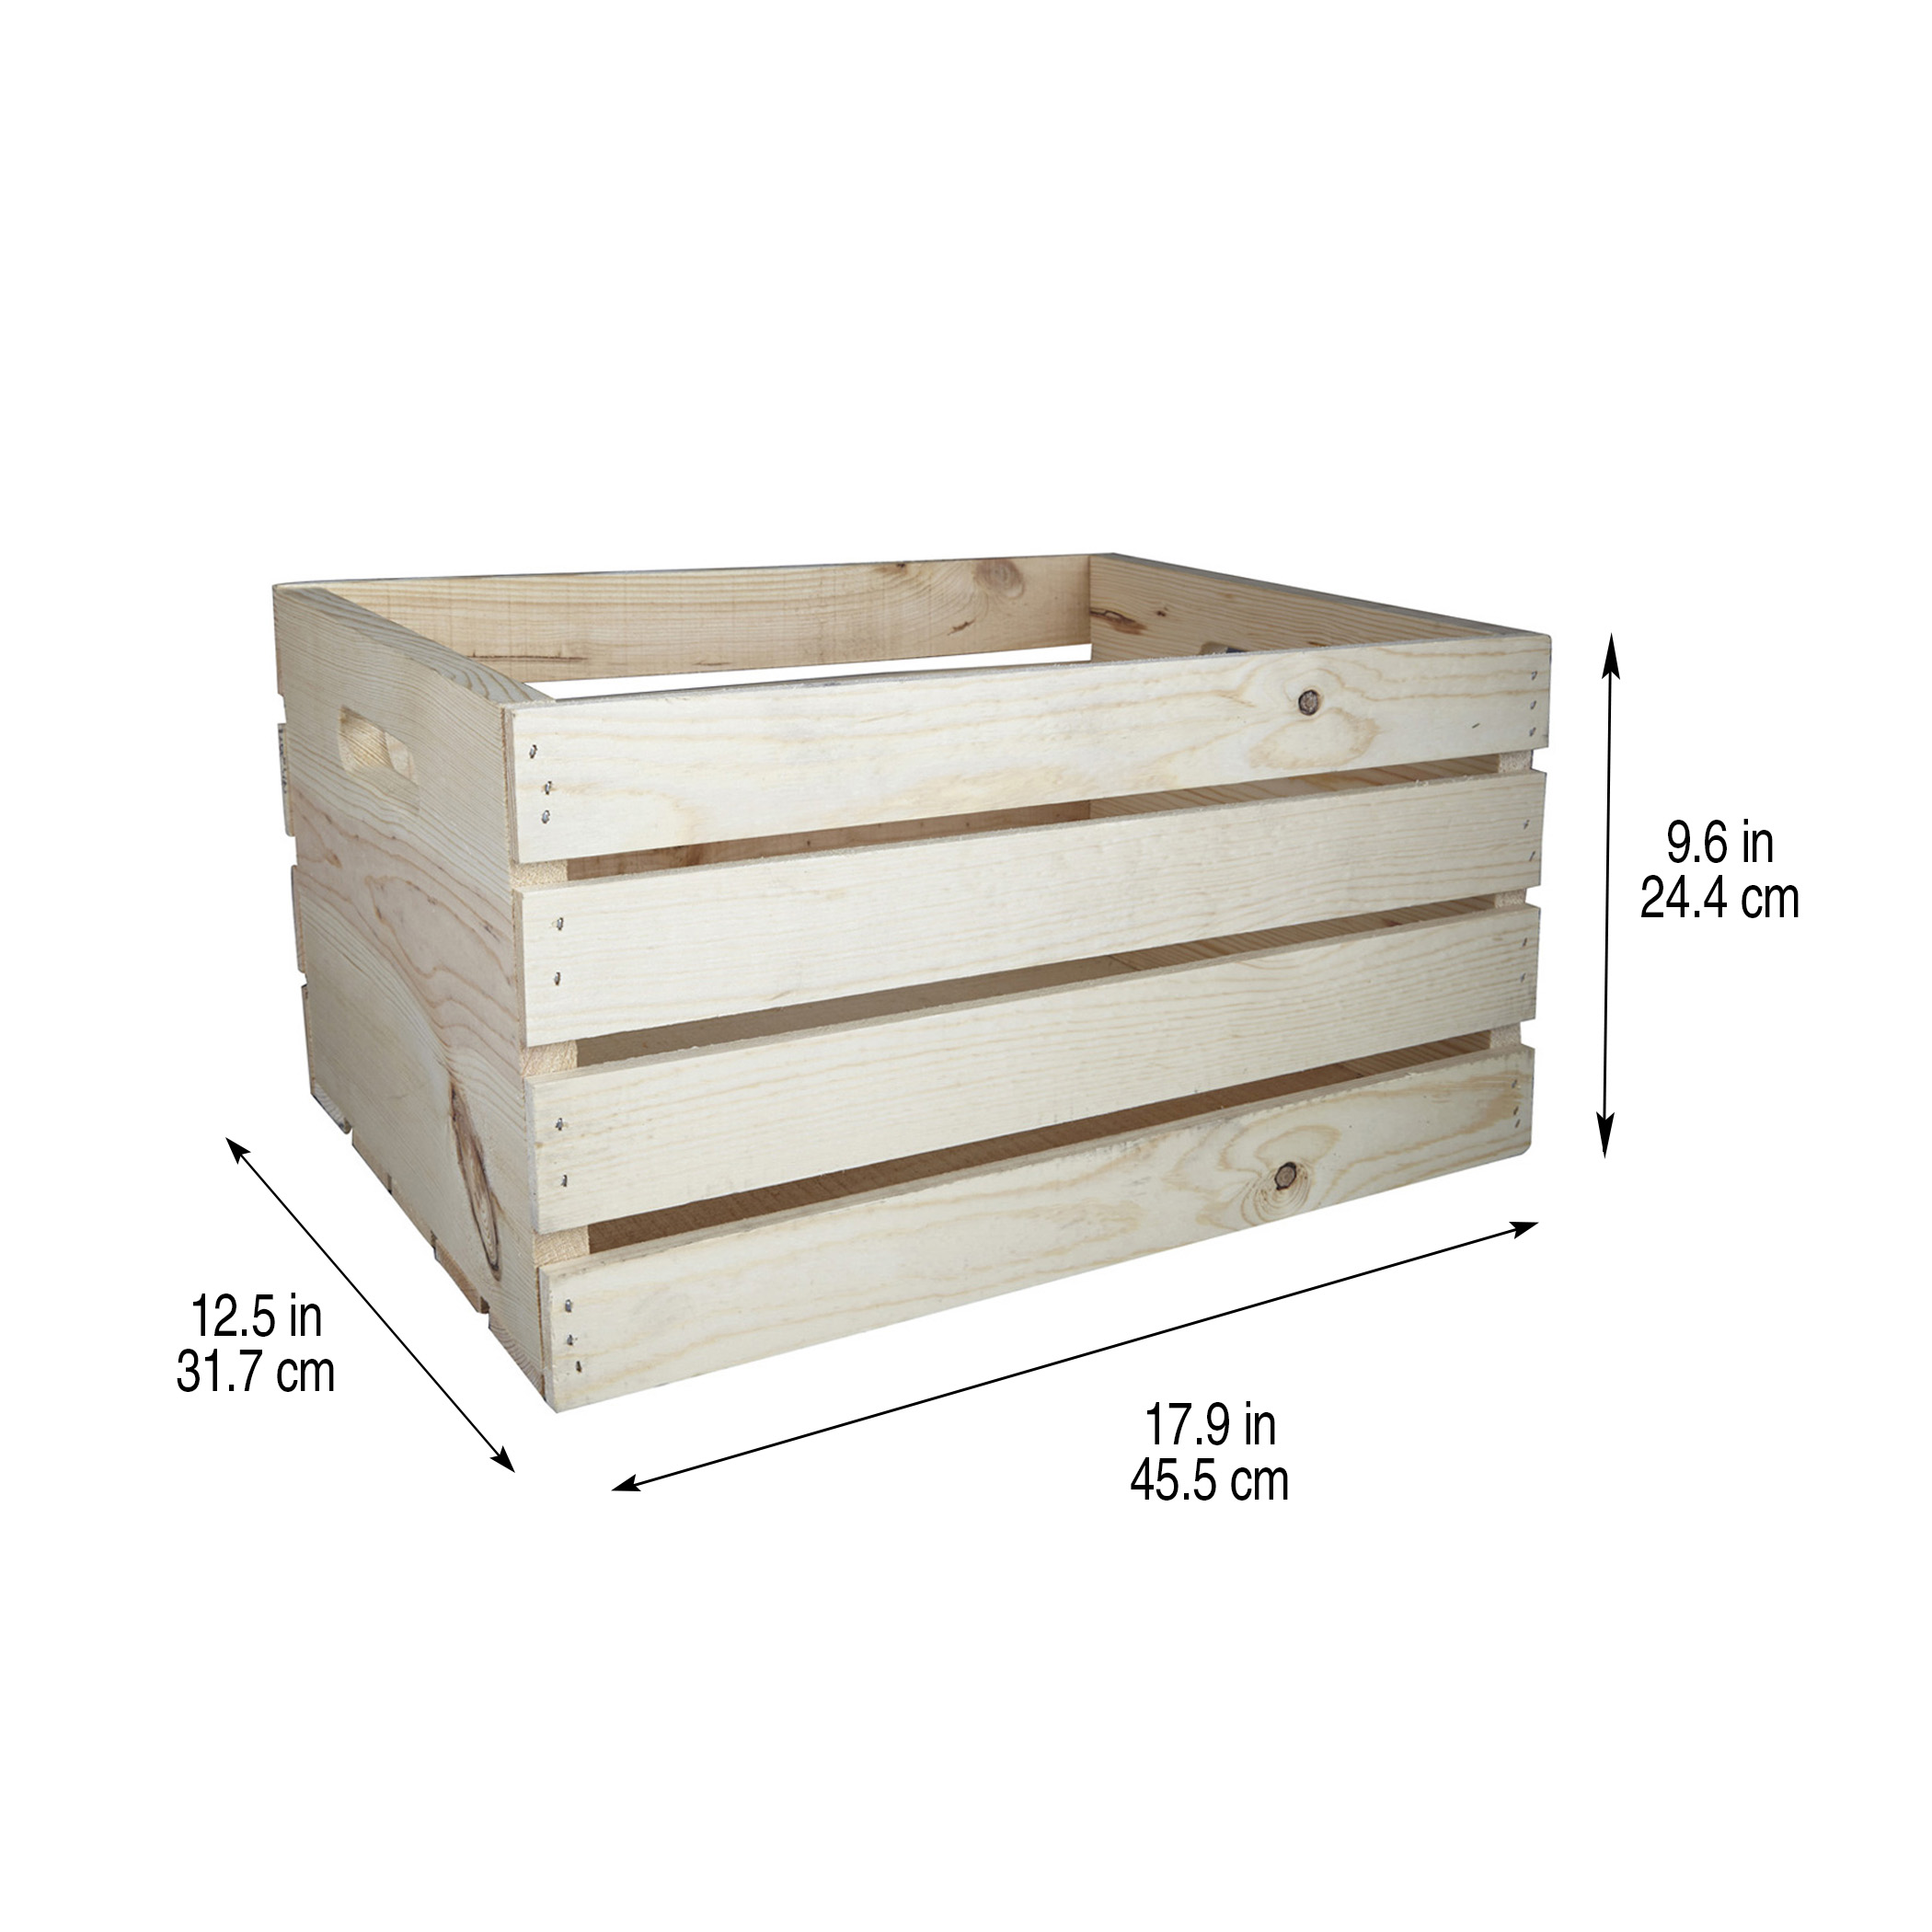 DIY Decorative Wooden Crate